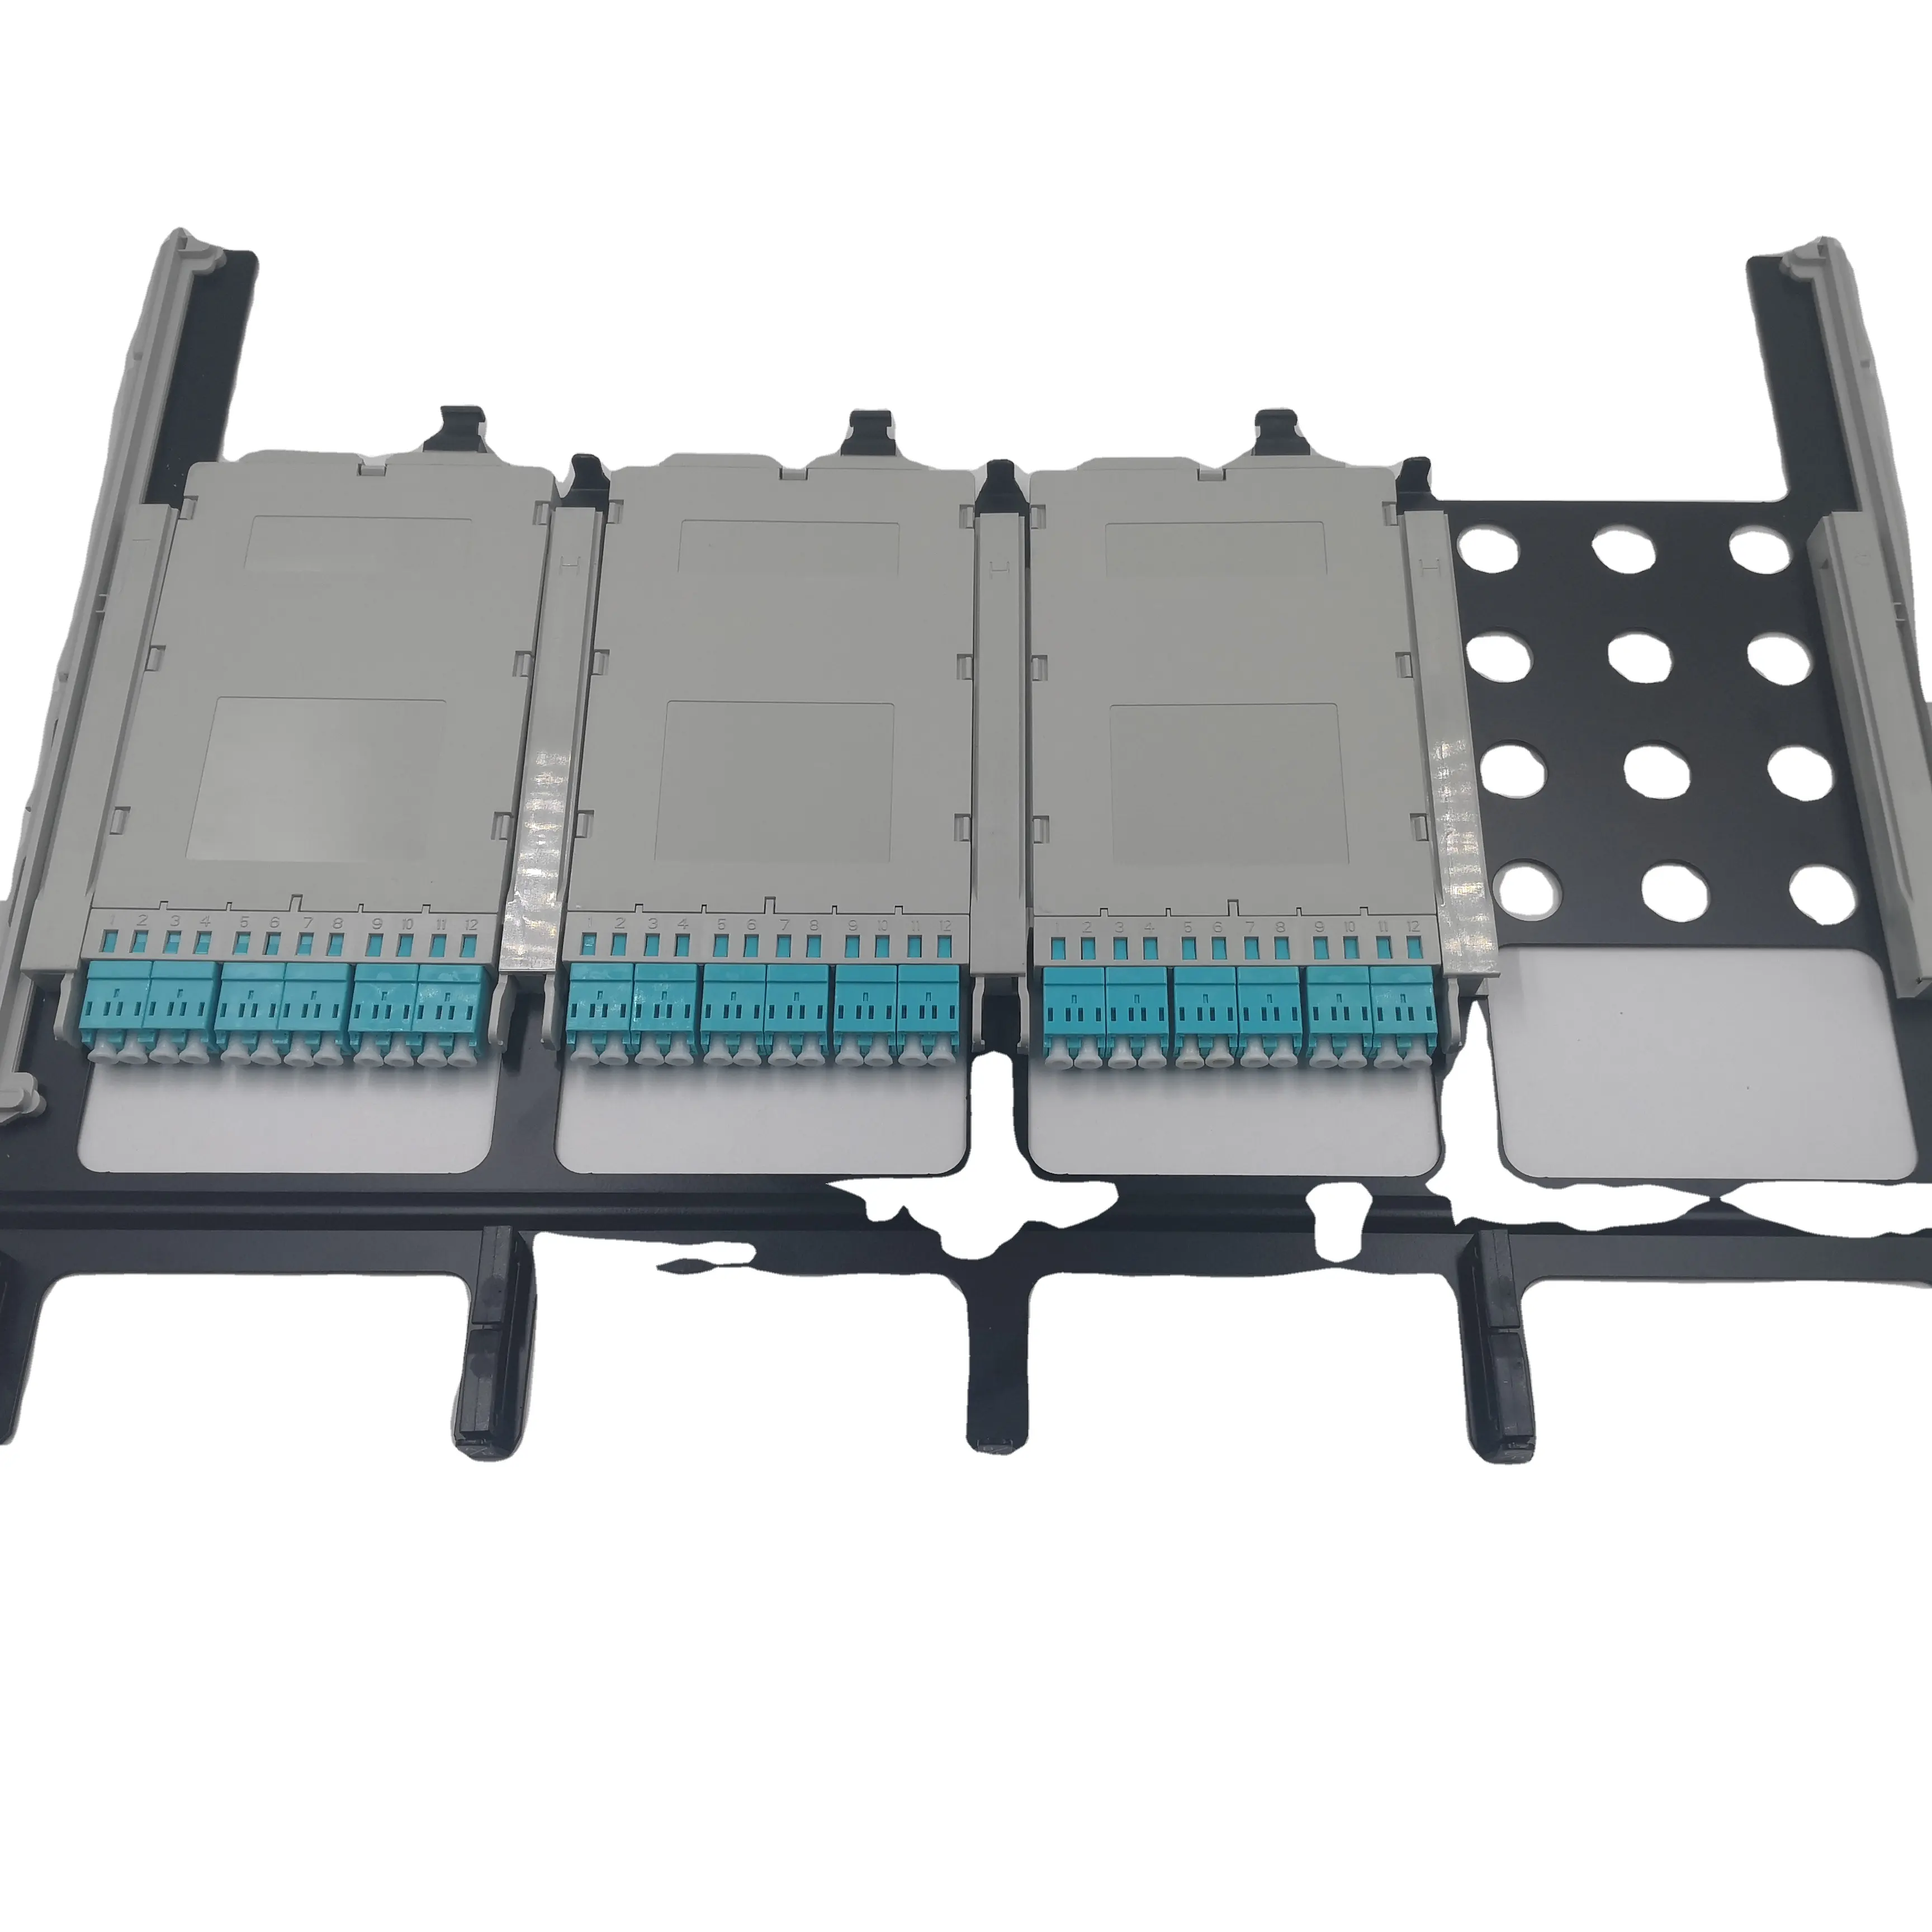 Cassette MPO MTP High Density Rack mount Fiber Optic 19 inch 1U 48 72 144 fibers Patch Panel